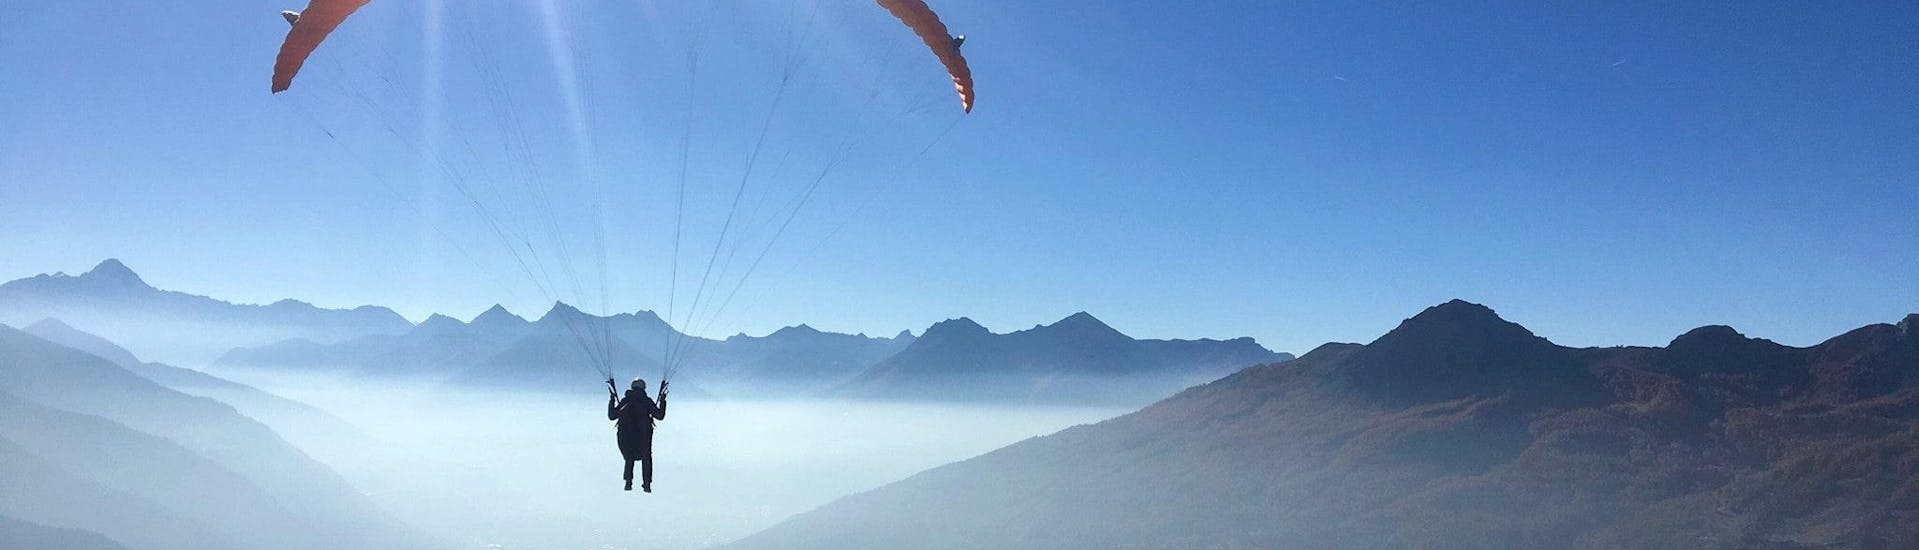 Thermik Tandem Paragliding in Valloire (ab 7 J.) - Col du Granon.